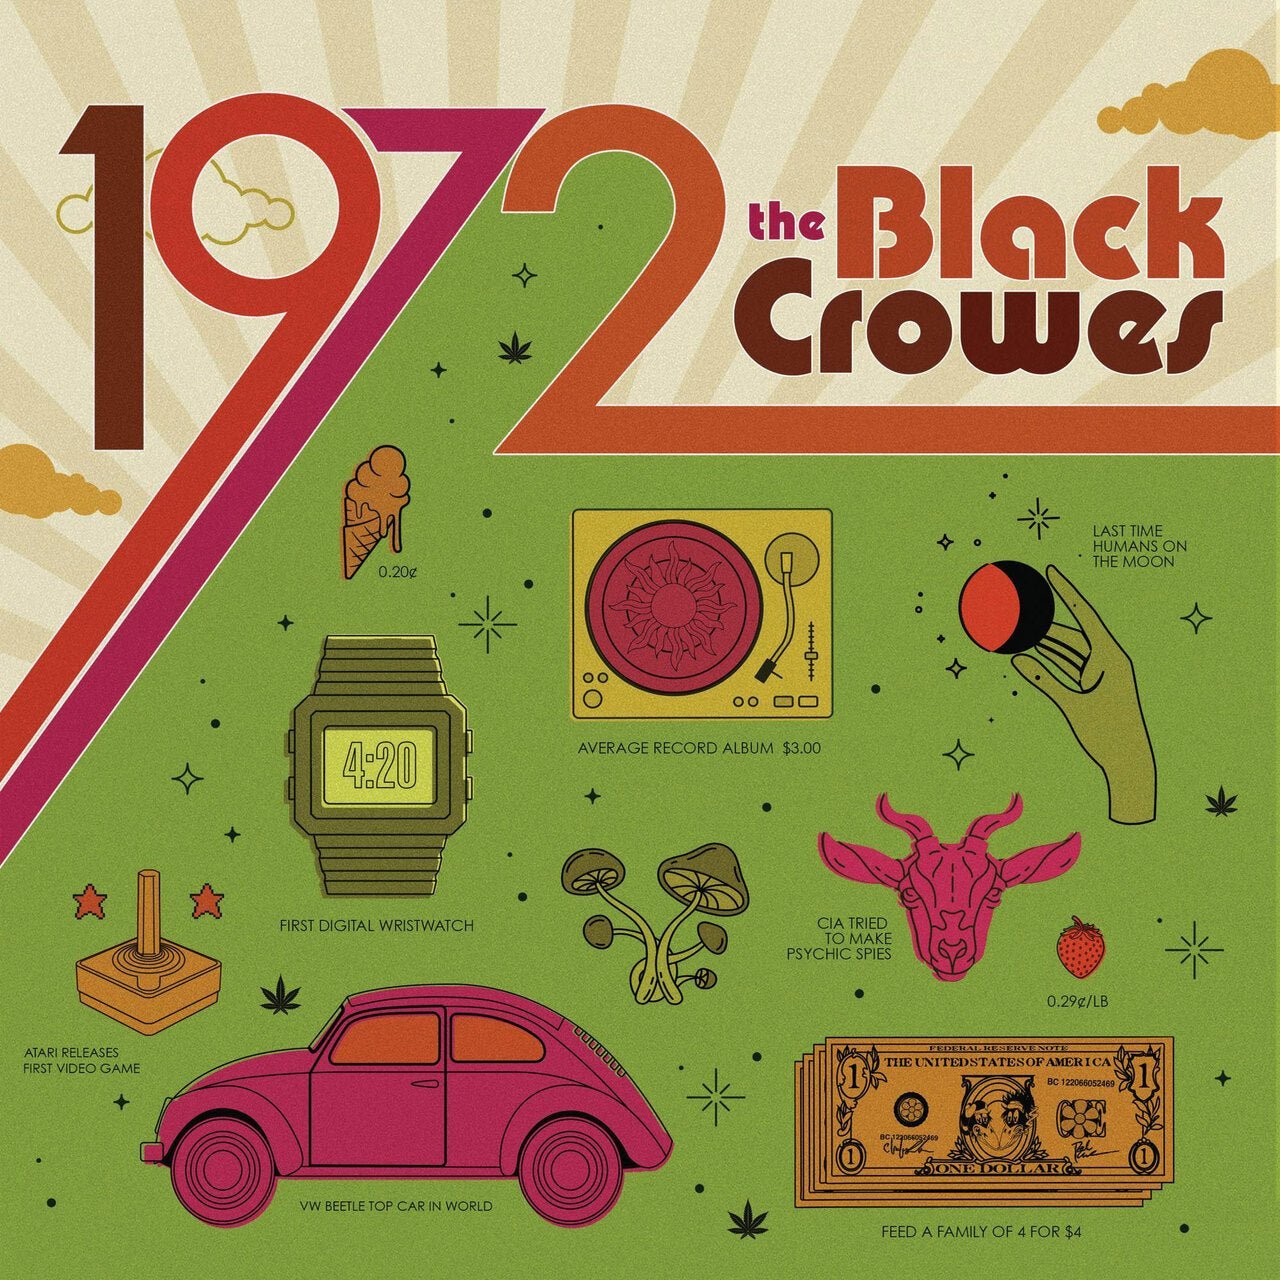 BLACK CROWES - 1972 Vinyl LP (Small Corner Dent)